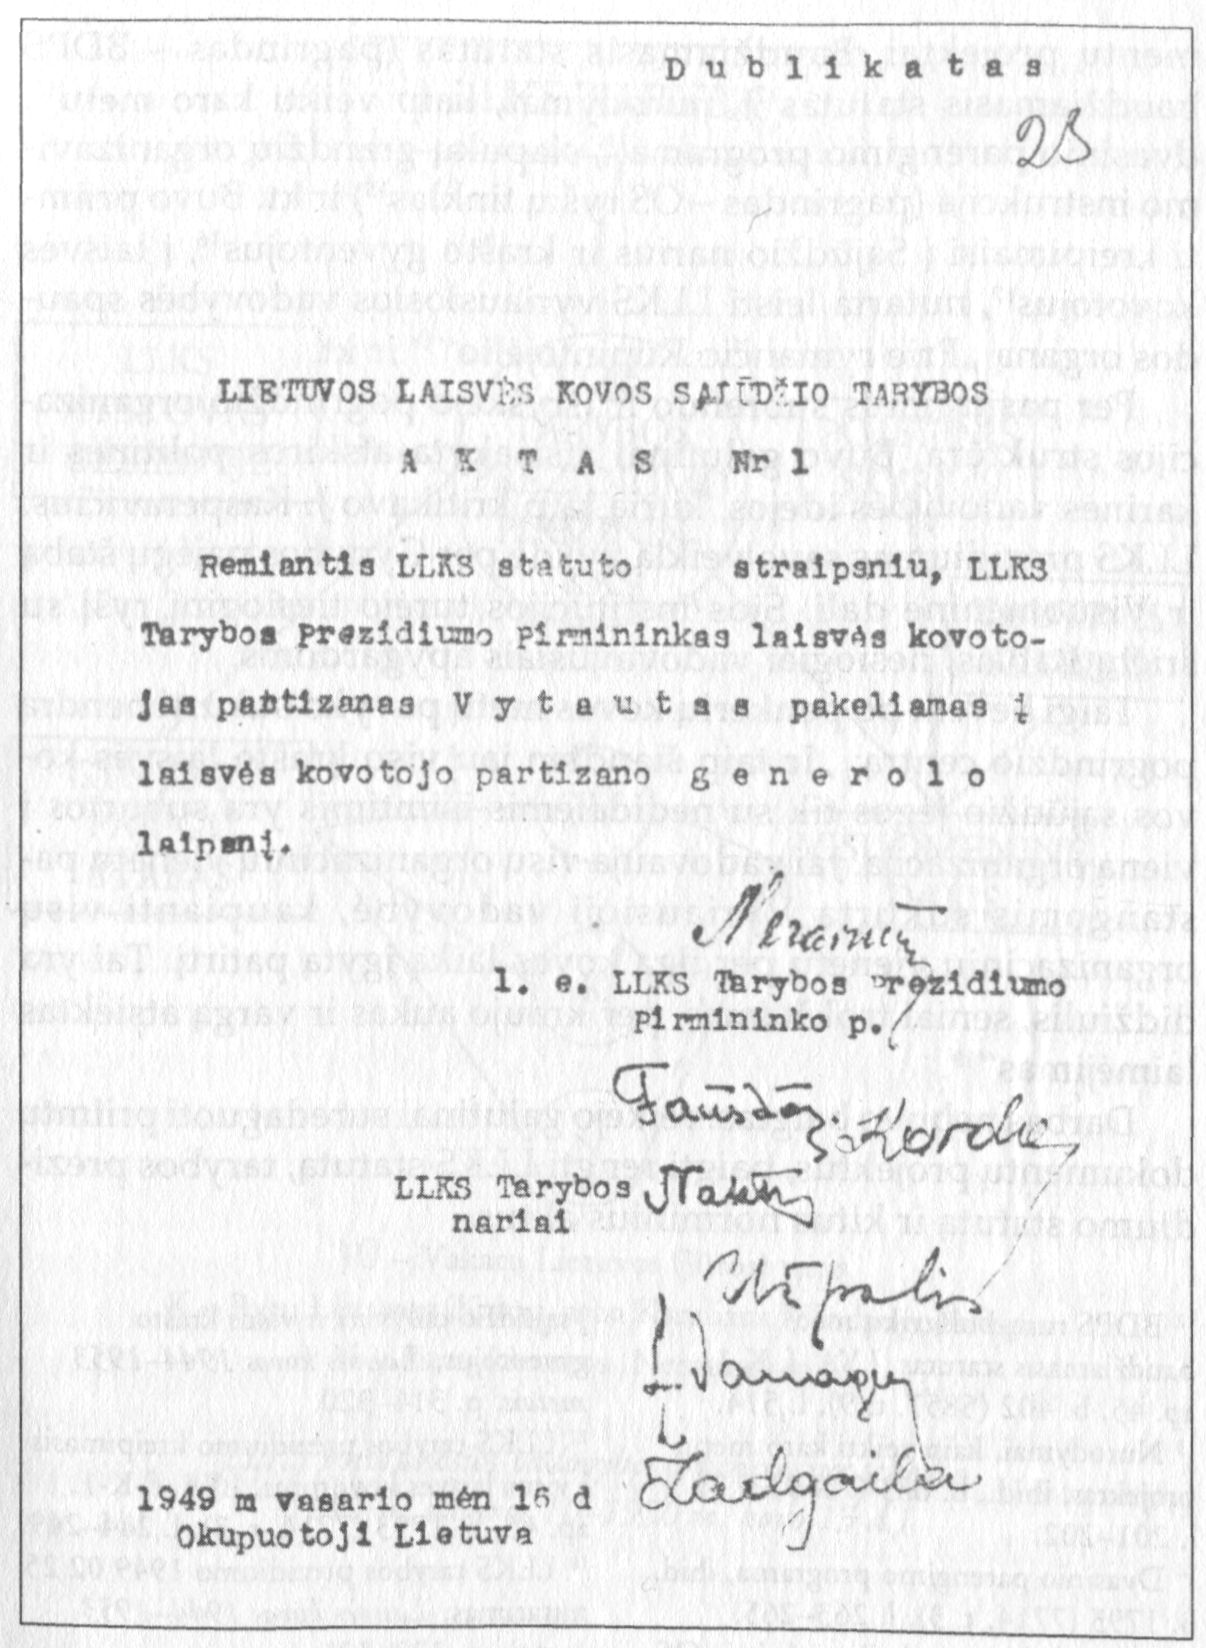 LLKS tarybos 1949 m. vasario 16 d. aktas